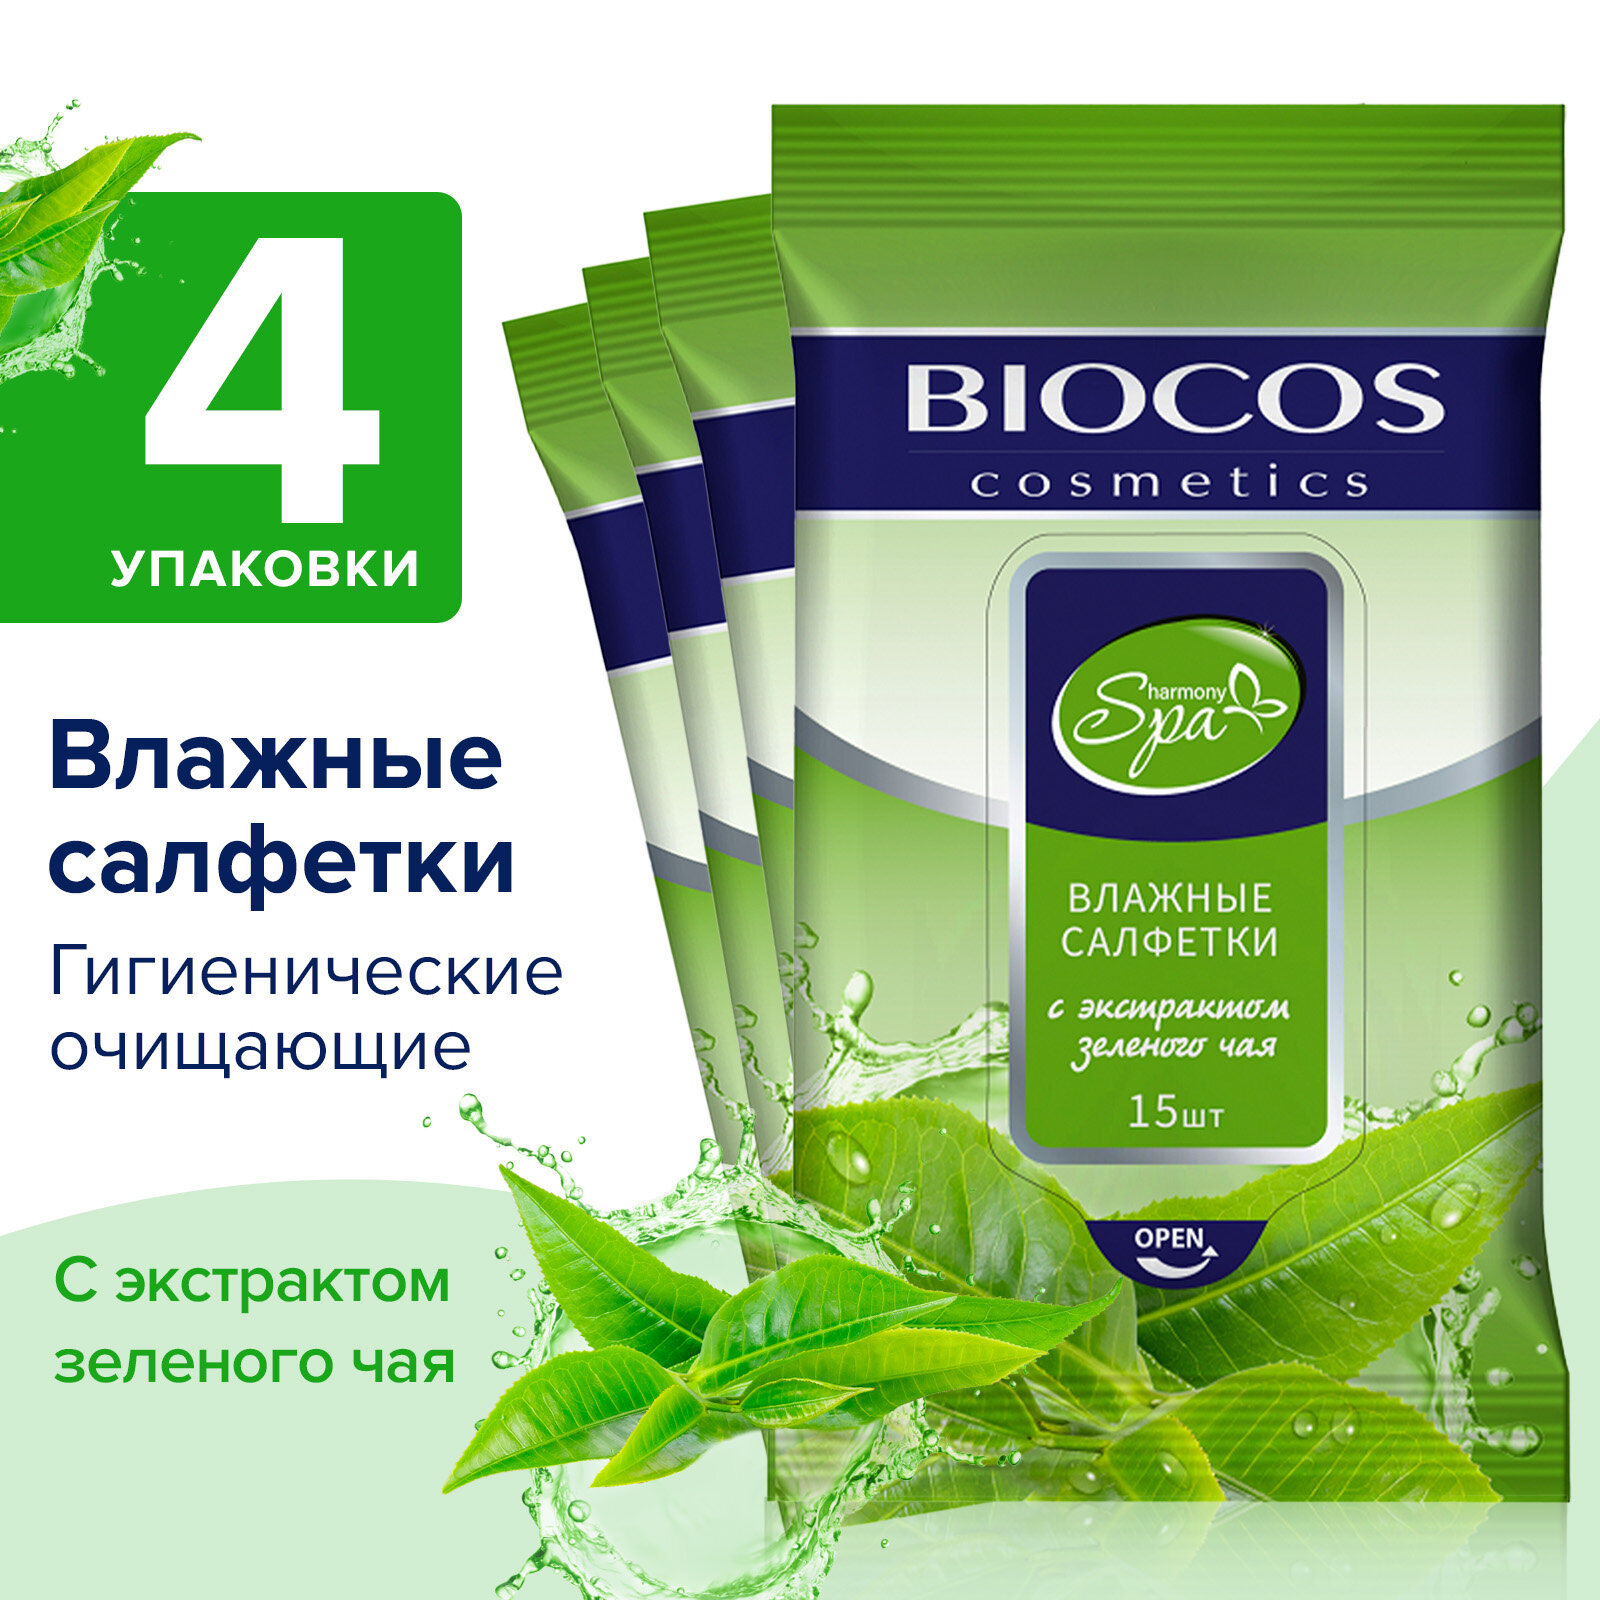 BioCos Салфетки влажные SPA Harmony/зеленый чай 4х15шт